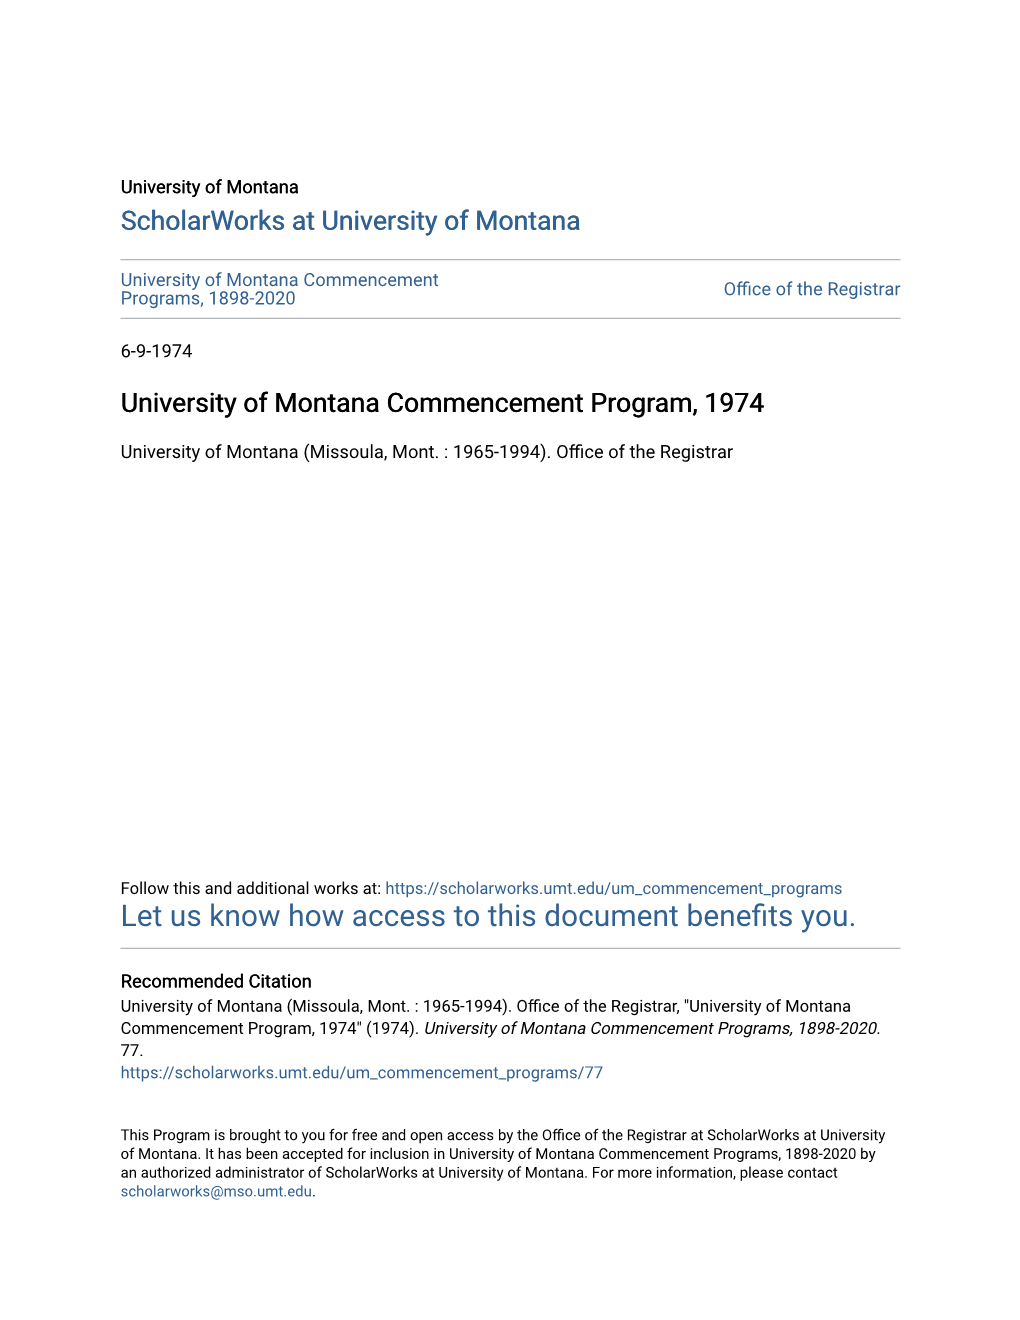 University of Montana Commencement Program, 1974